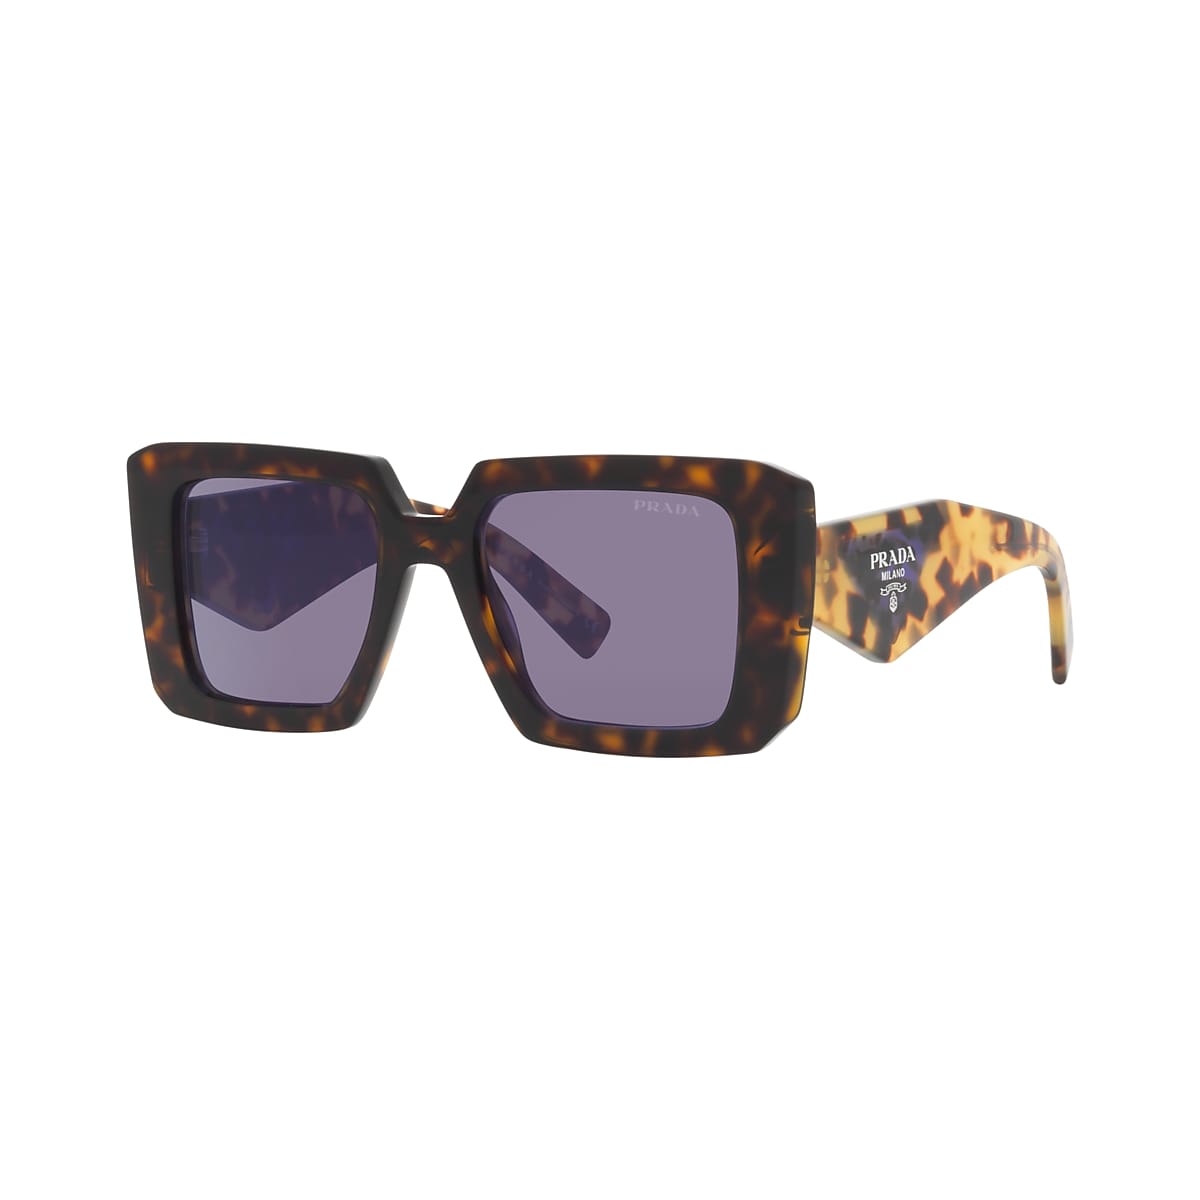 afbryde En god ven hulkende Prada PR 23YS 51 Violet Mirror & Tortoise Sunglasses | Sunglass Hut USA